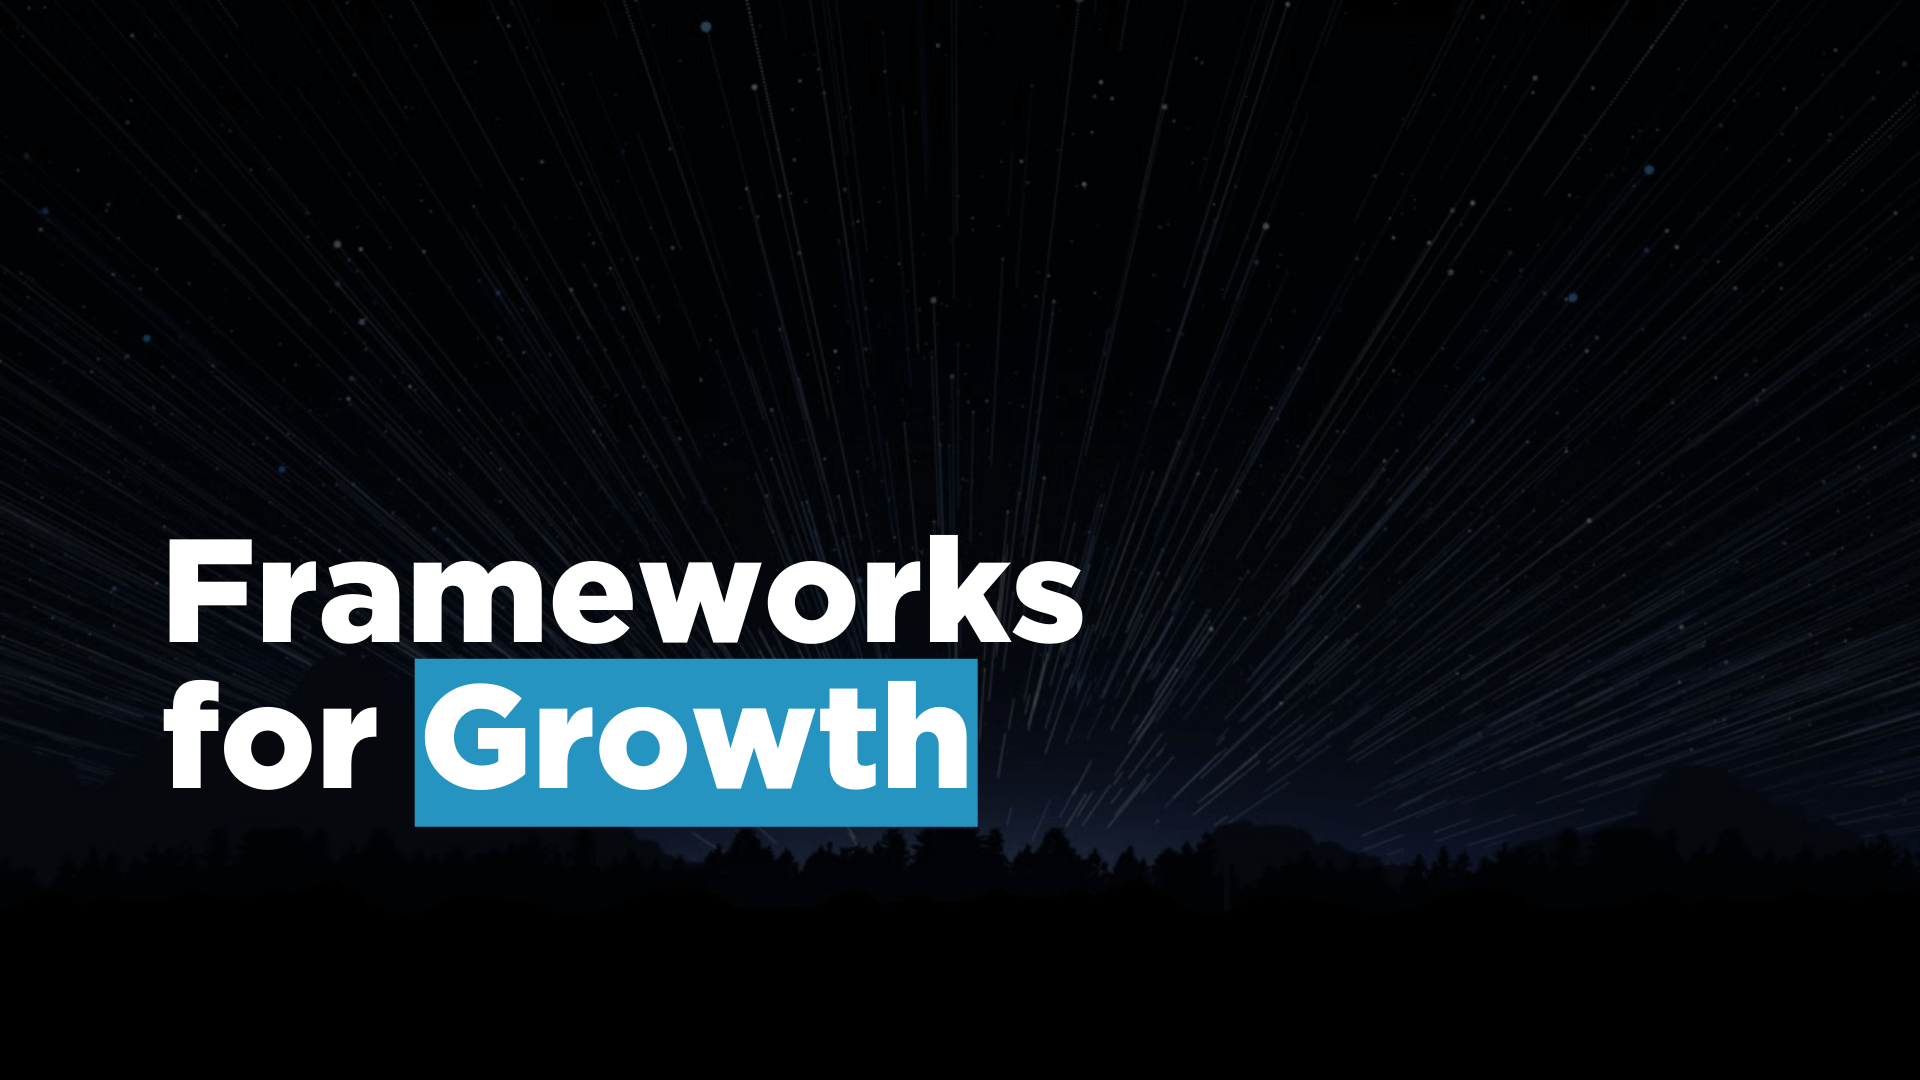 Frameworks for growth